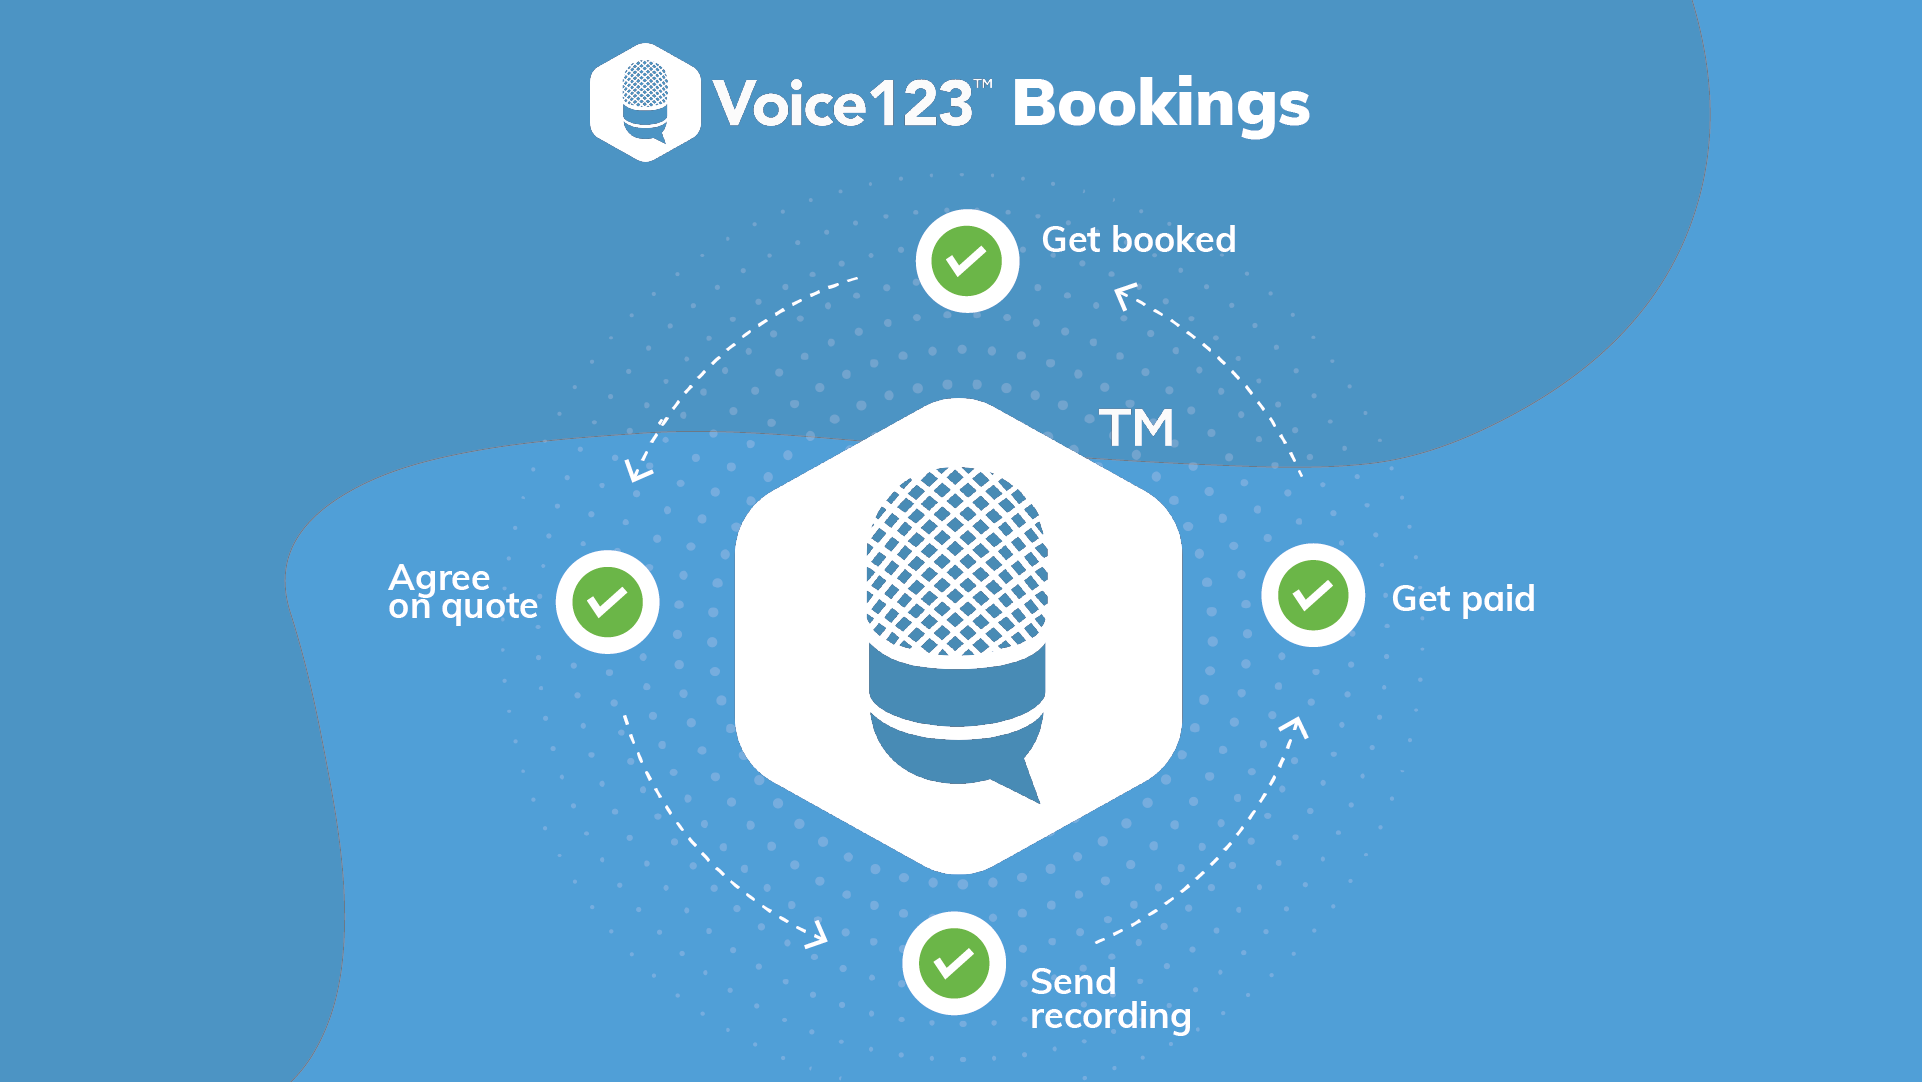 Voice123 voice acting jobs